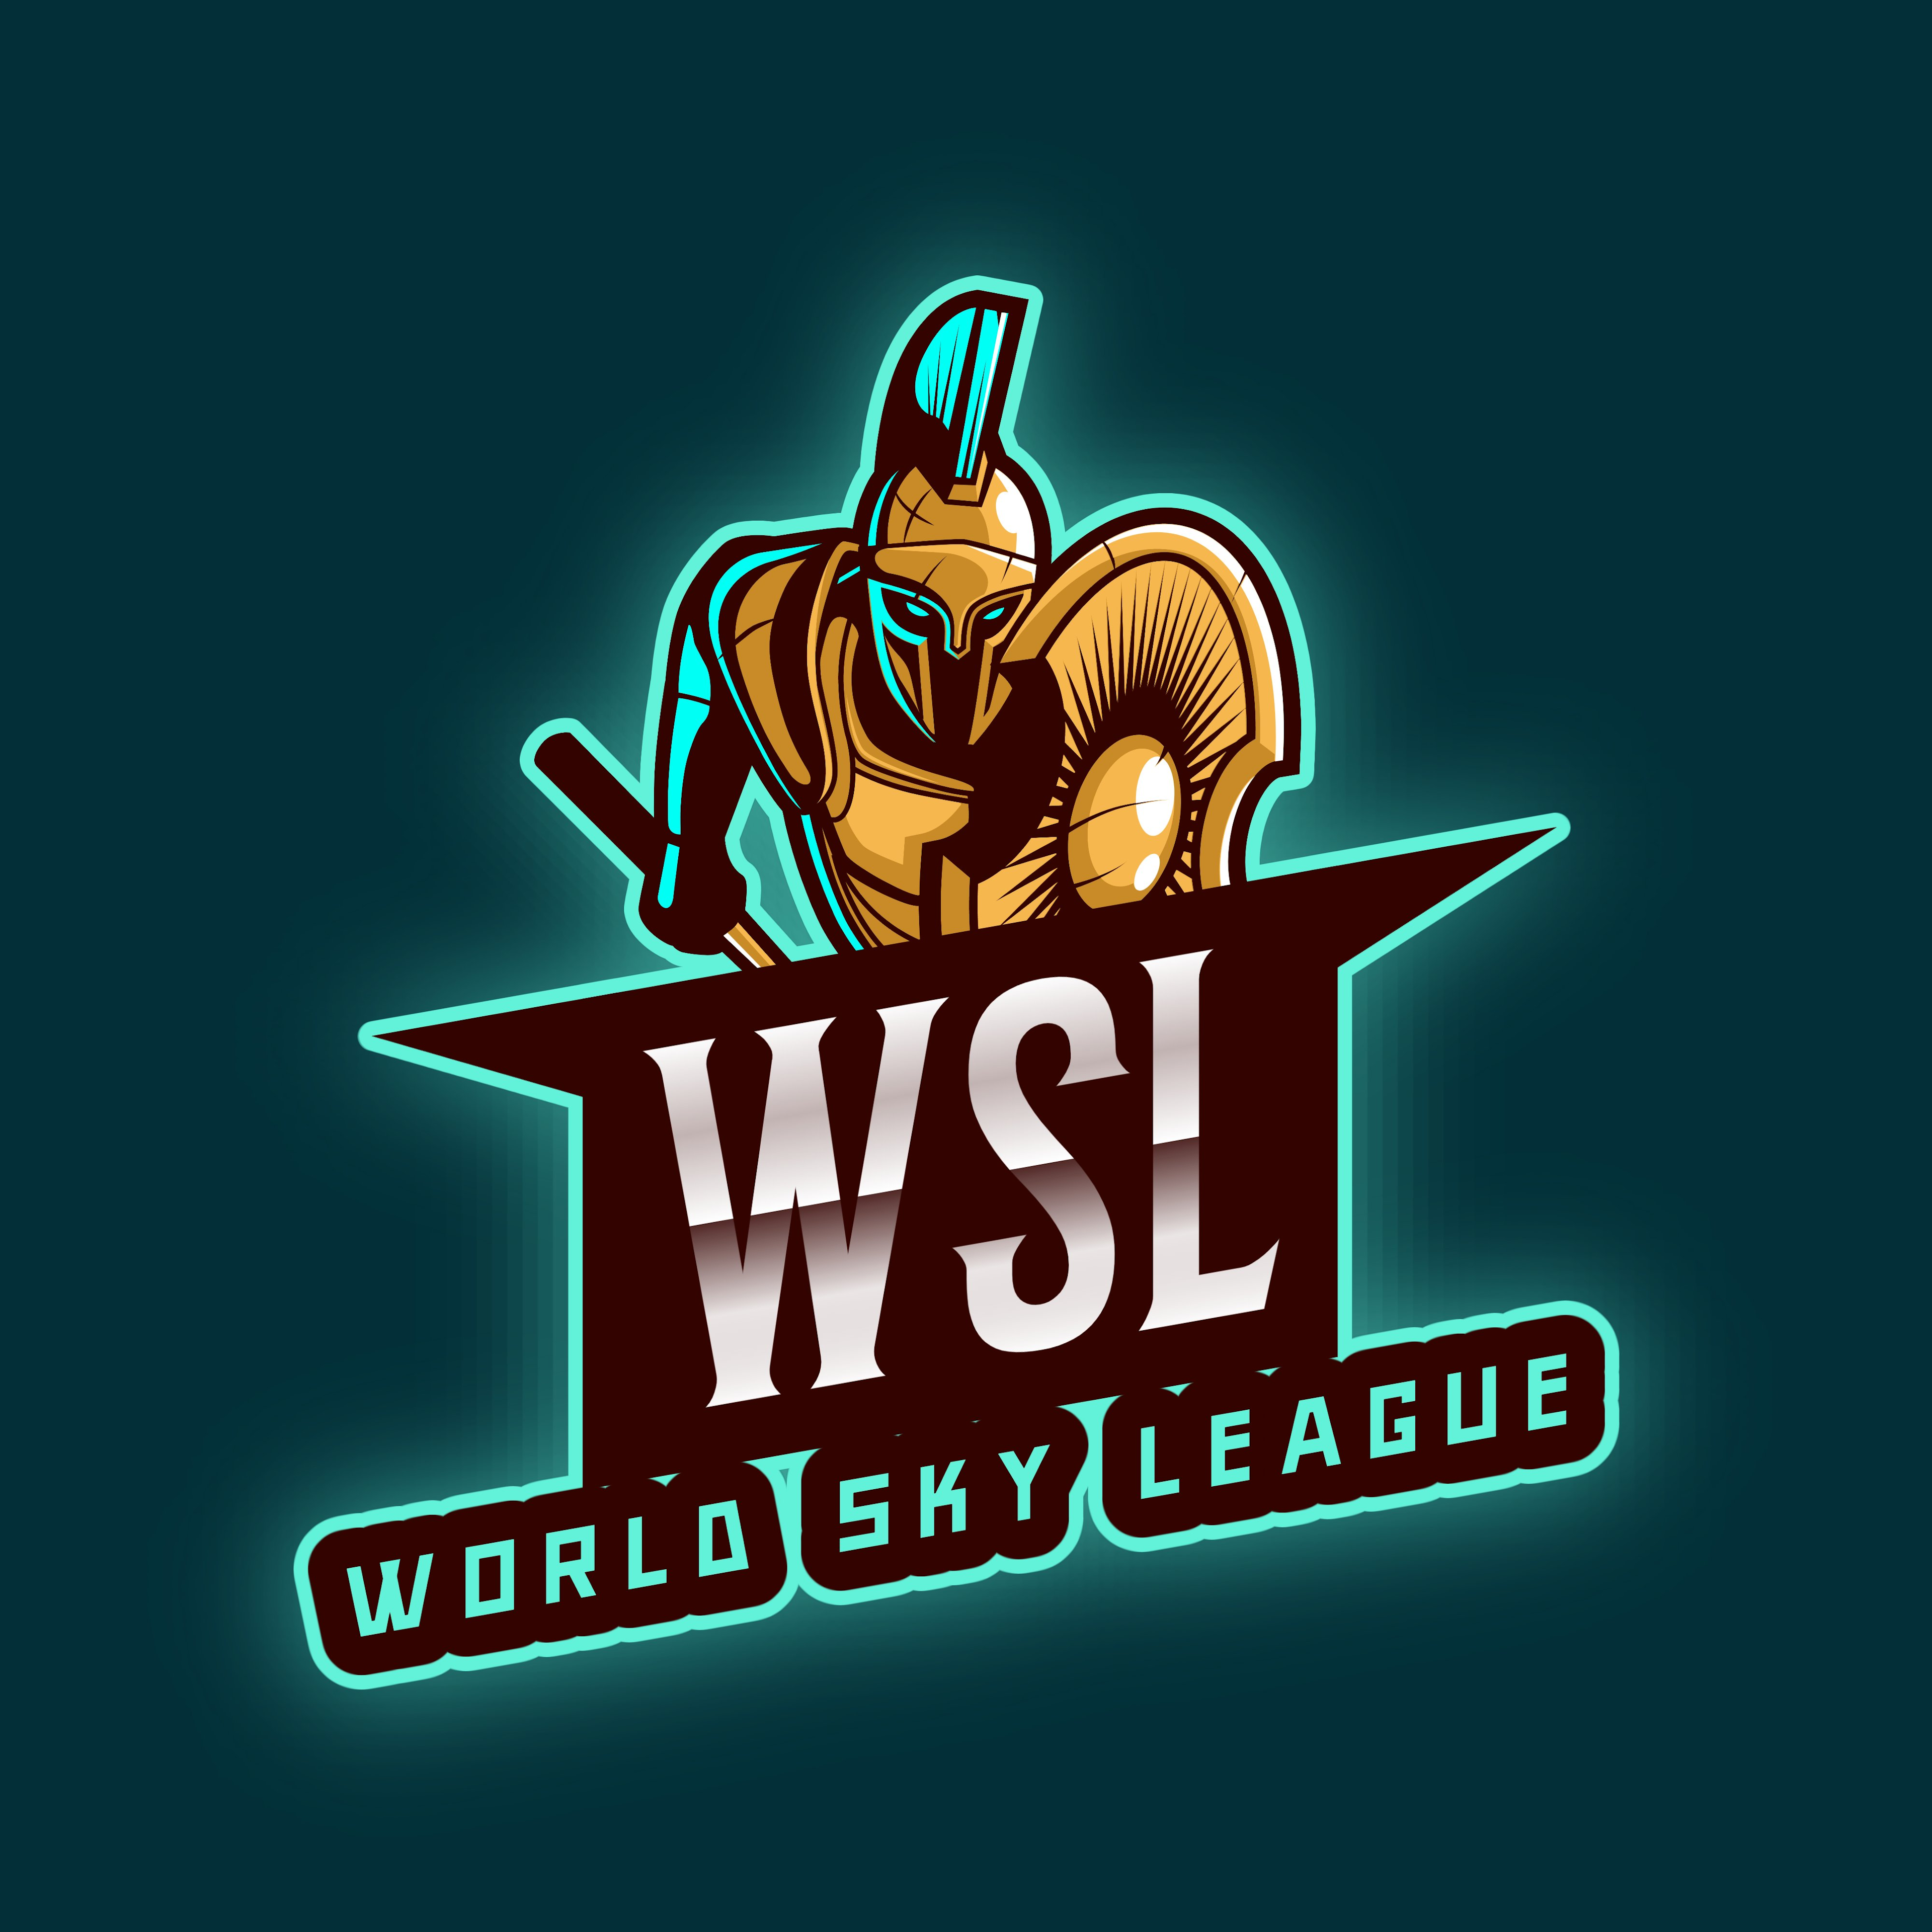 The incredible World Sky League logo, courtesy of Bushi.